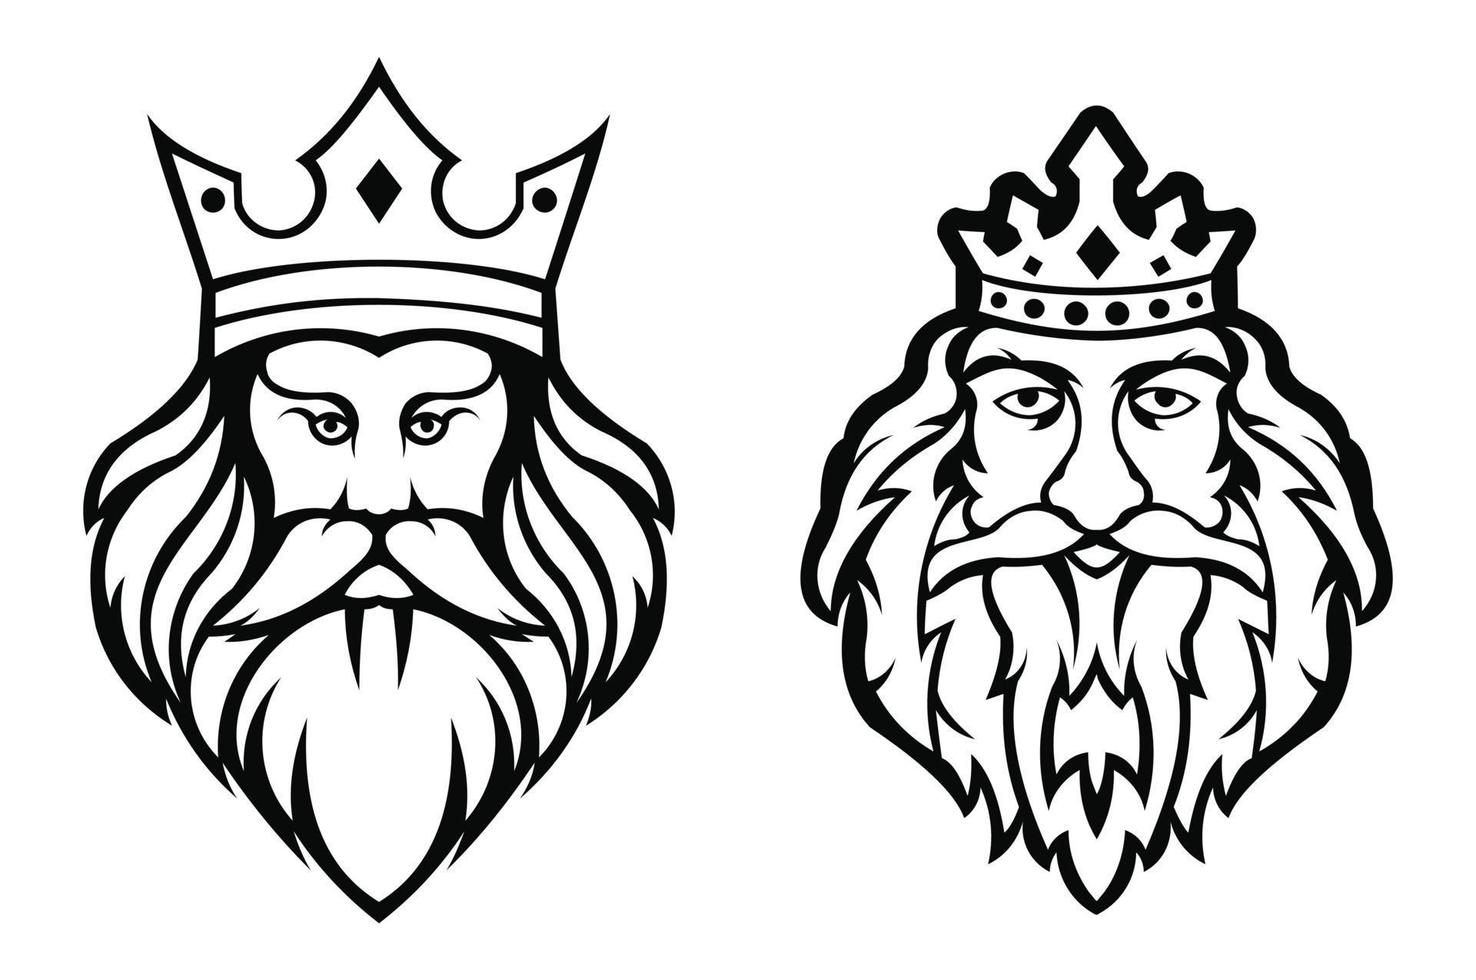 rey barbudo logo.rey hombre, elemento de diseño para signo, insignia, camiseta, póster. vector